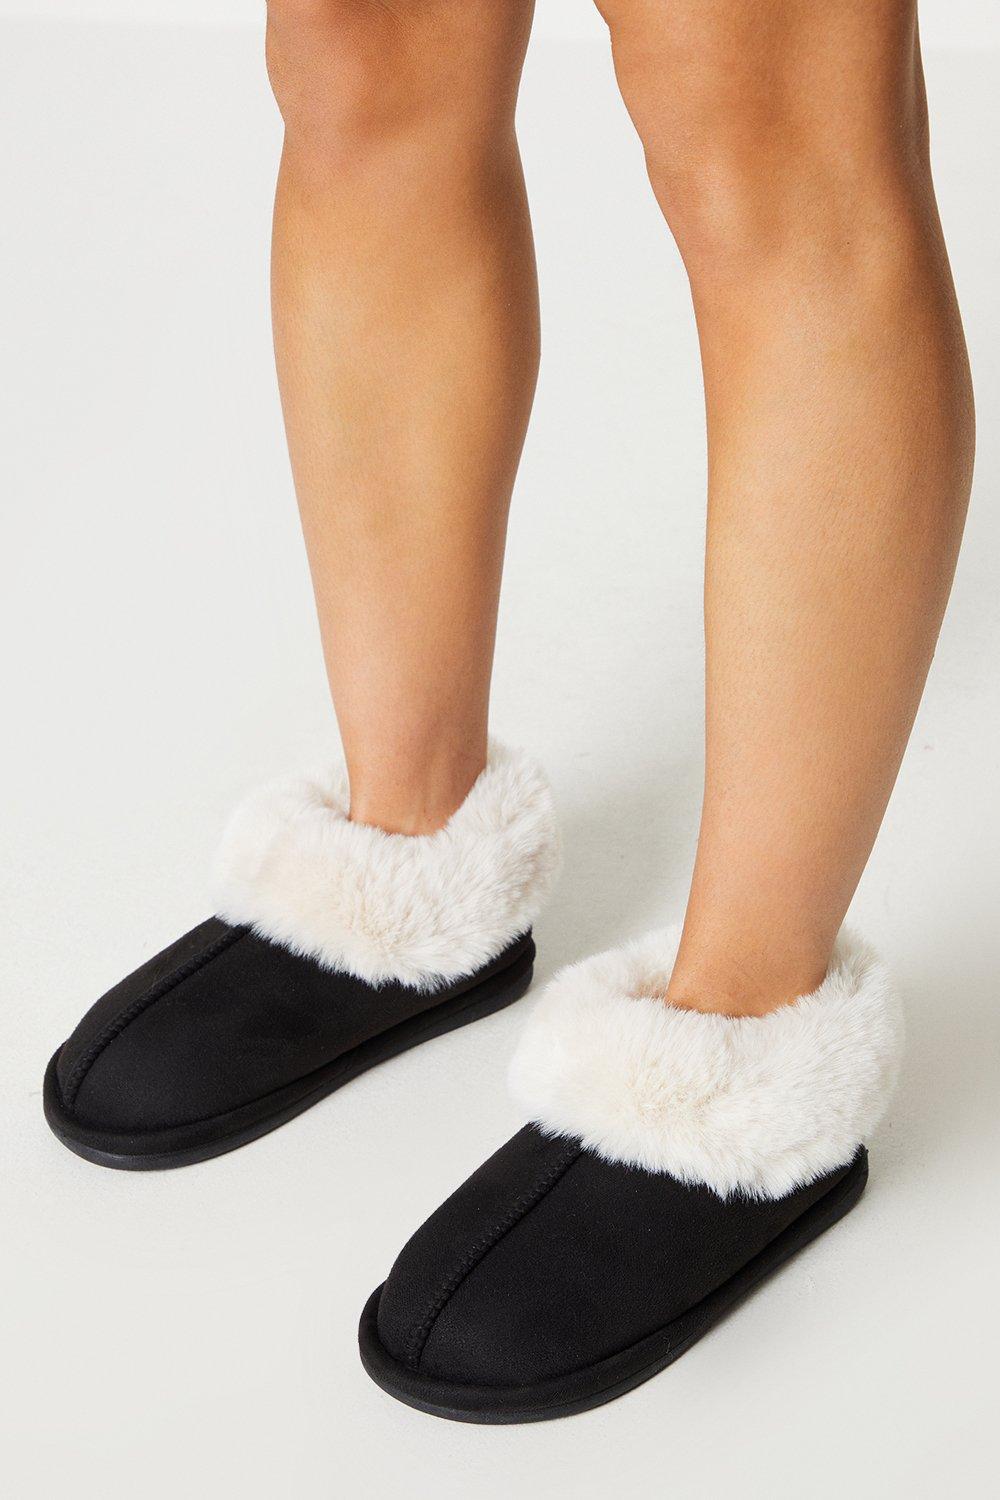 Women's Maggi Faux Fur Sheepskin Fur Bootie Slippers - natural black - 4